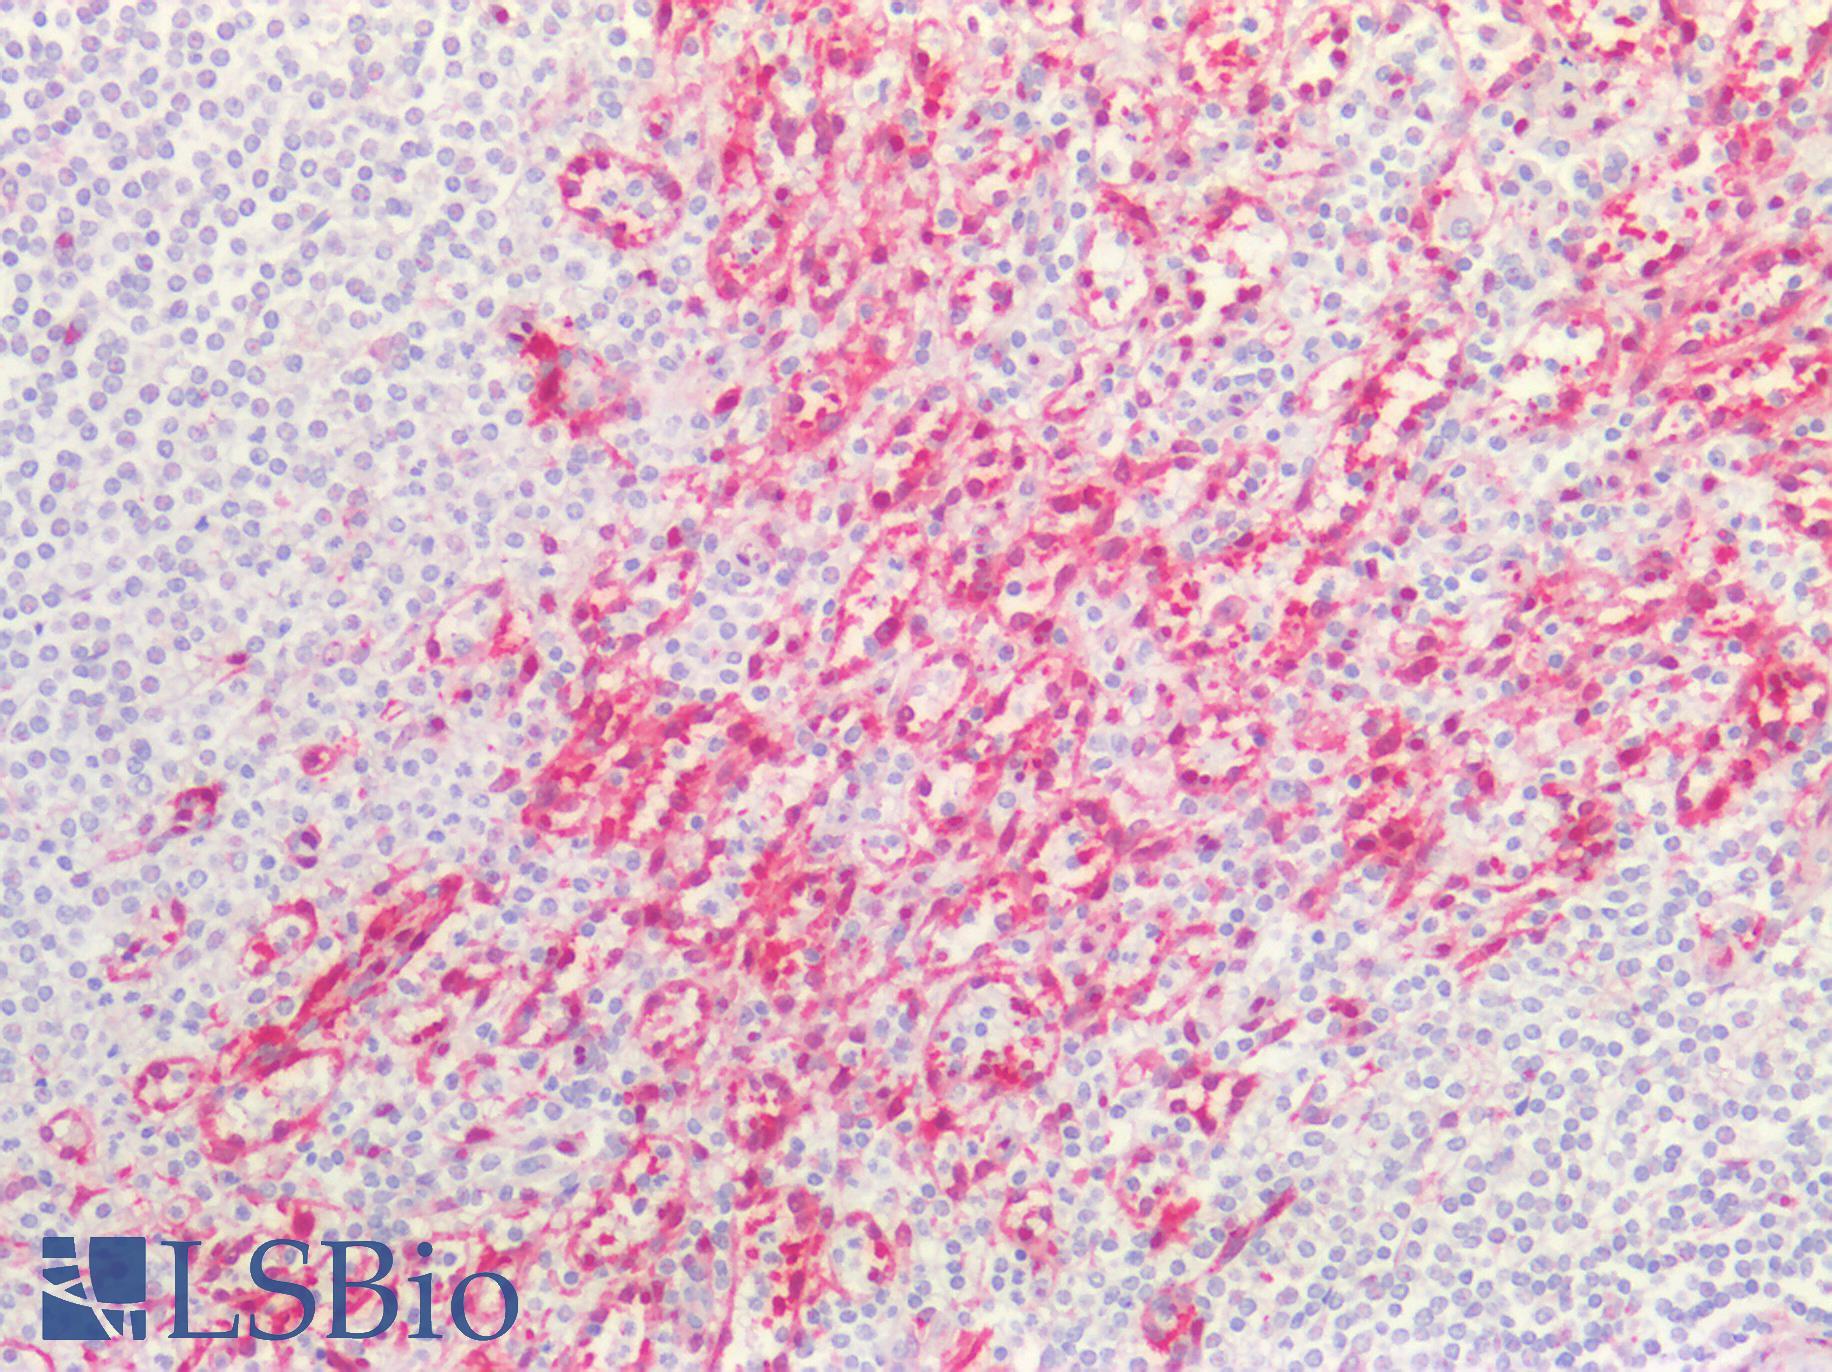 ALDH1A1 / ALDH1 Antibody - Human Spleen: Formalin-Fixed, Paraffin-Embedded (FFPE)